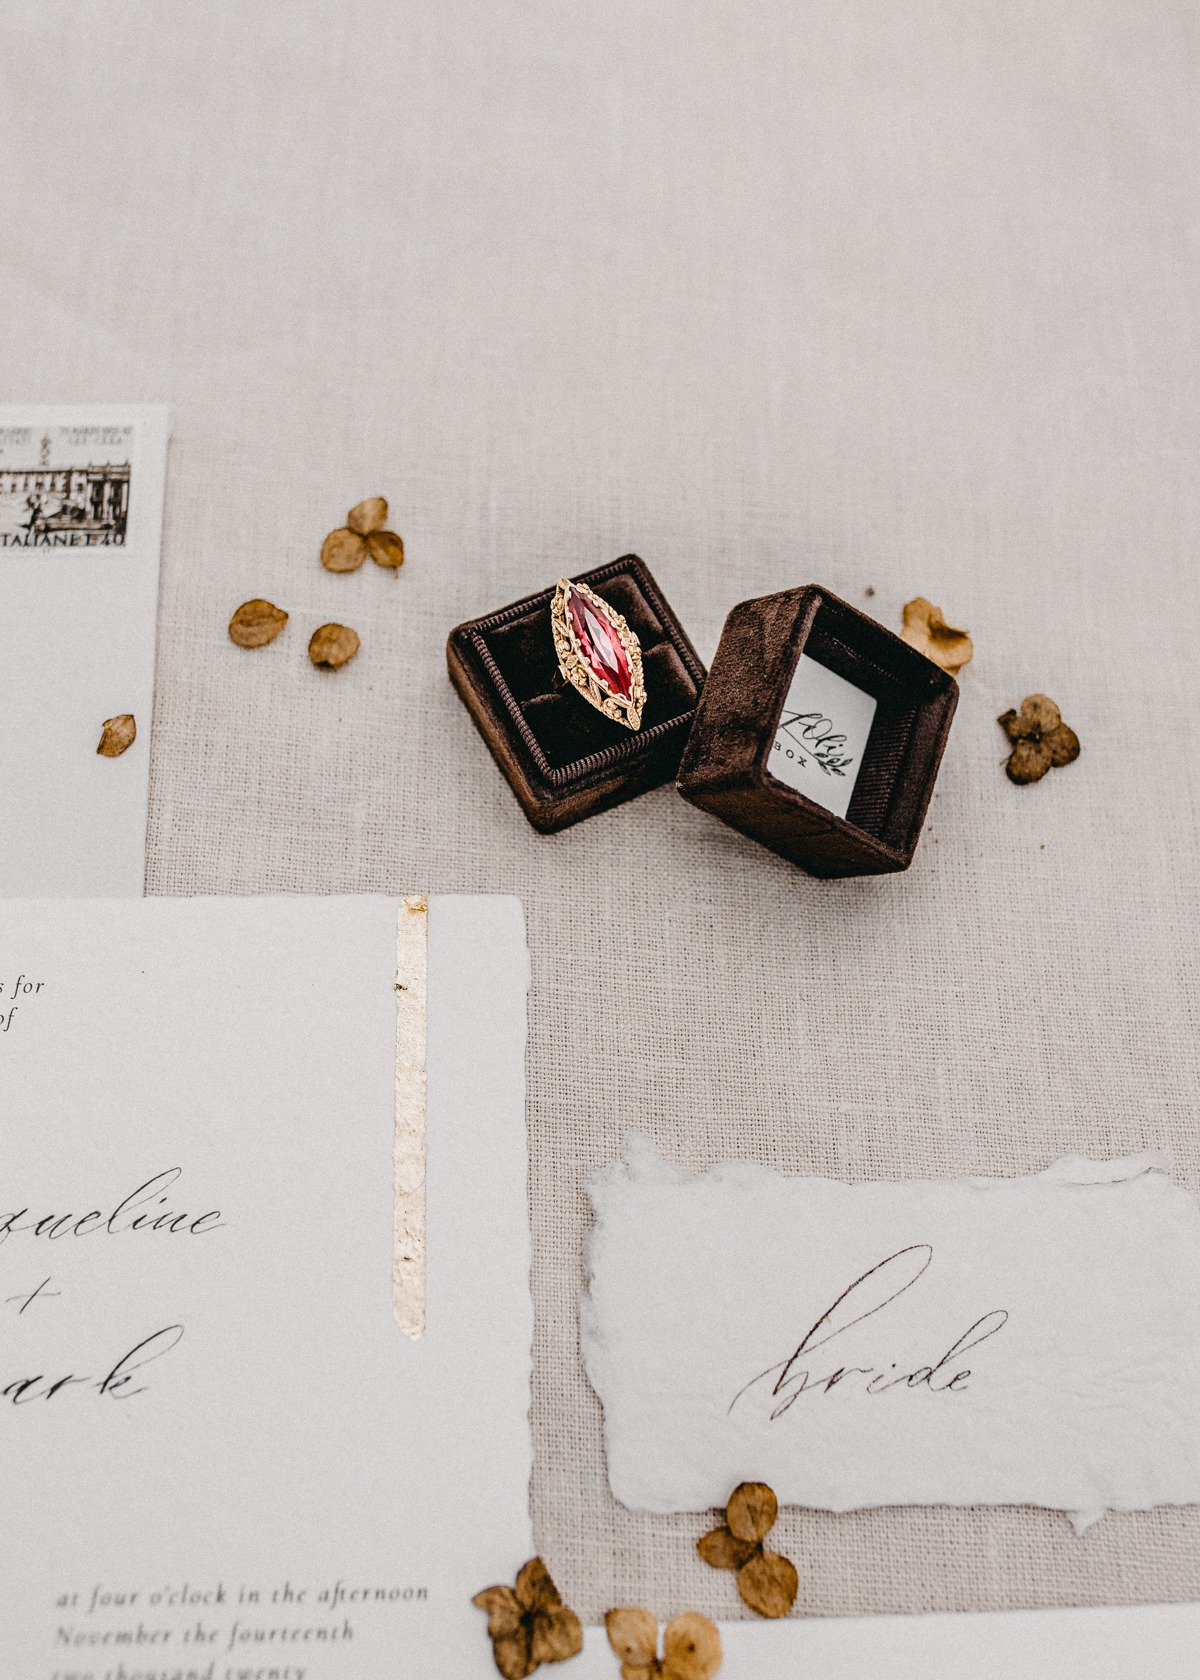 This Gilded Wedding Inspiration Shoot Looks Like A Modern Fairytale